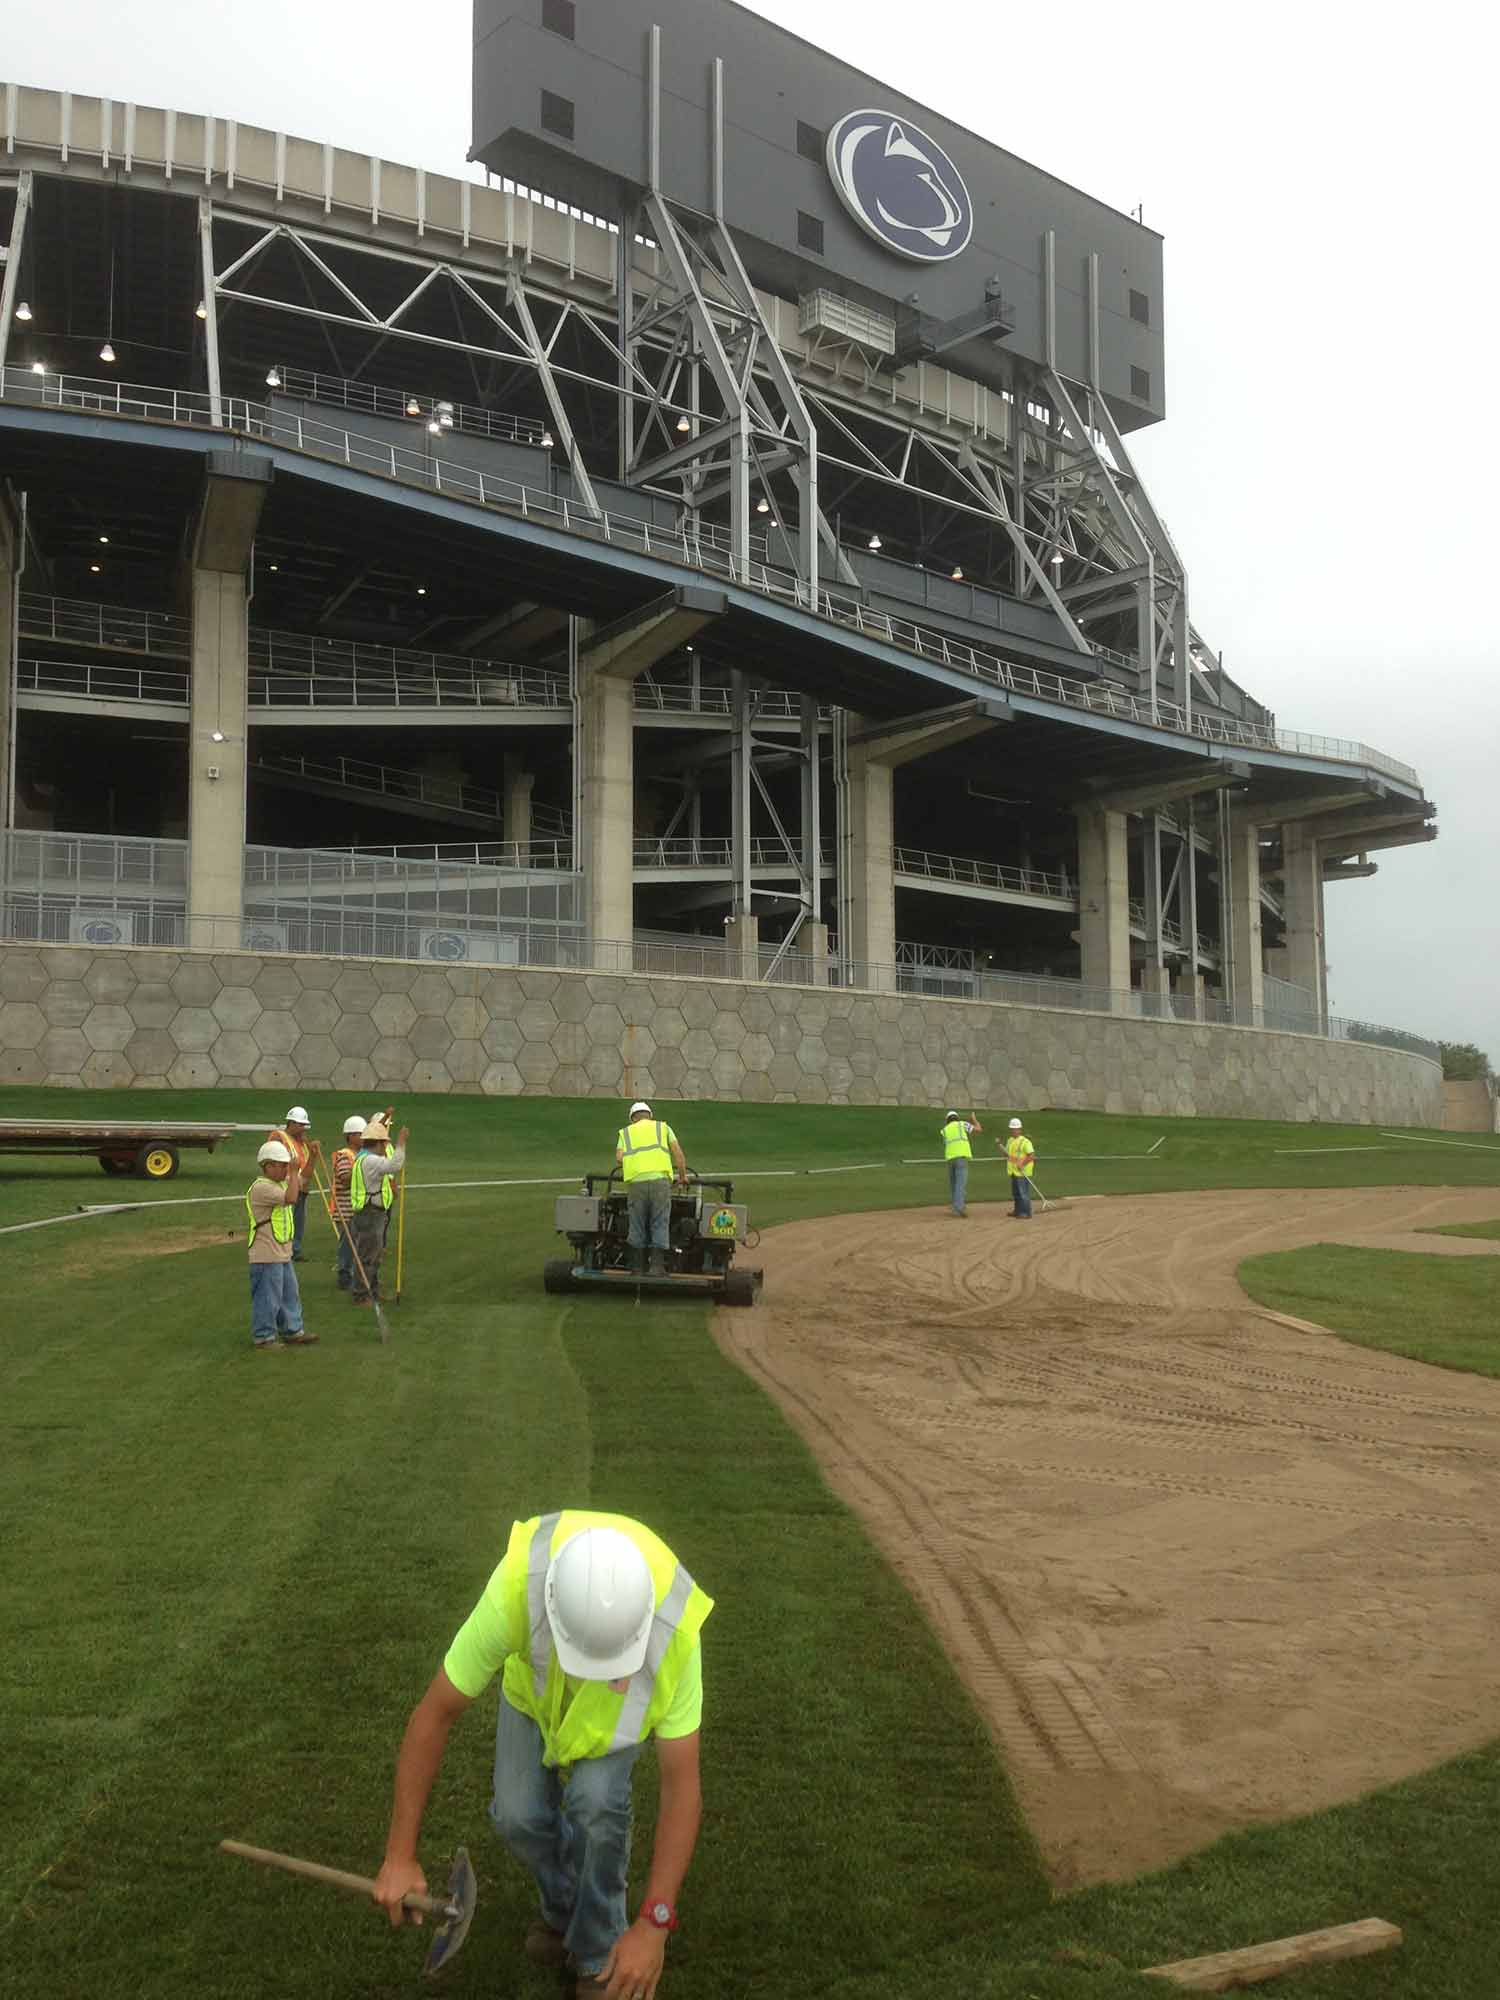 Penn State Beaver Stadium Practice Field Renovations